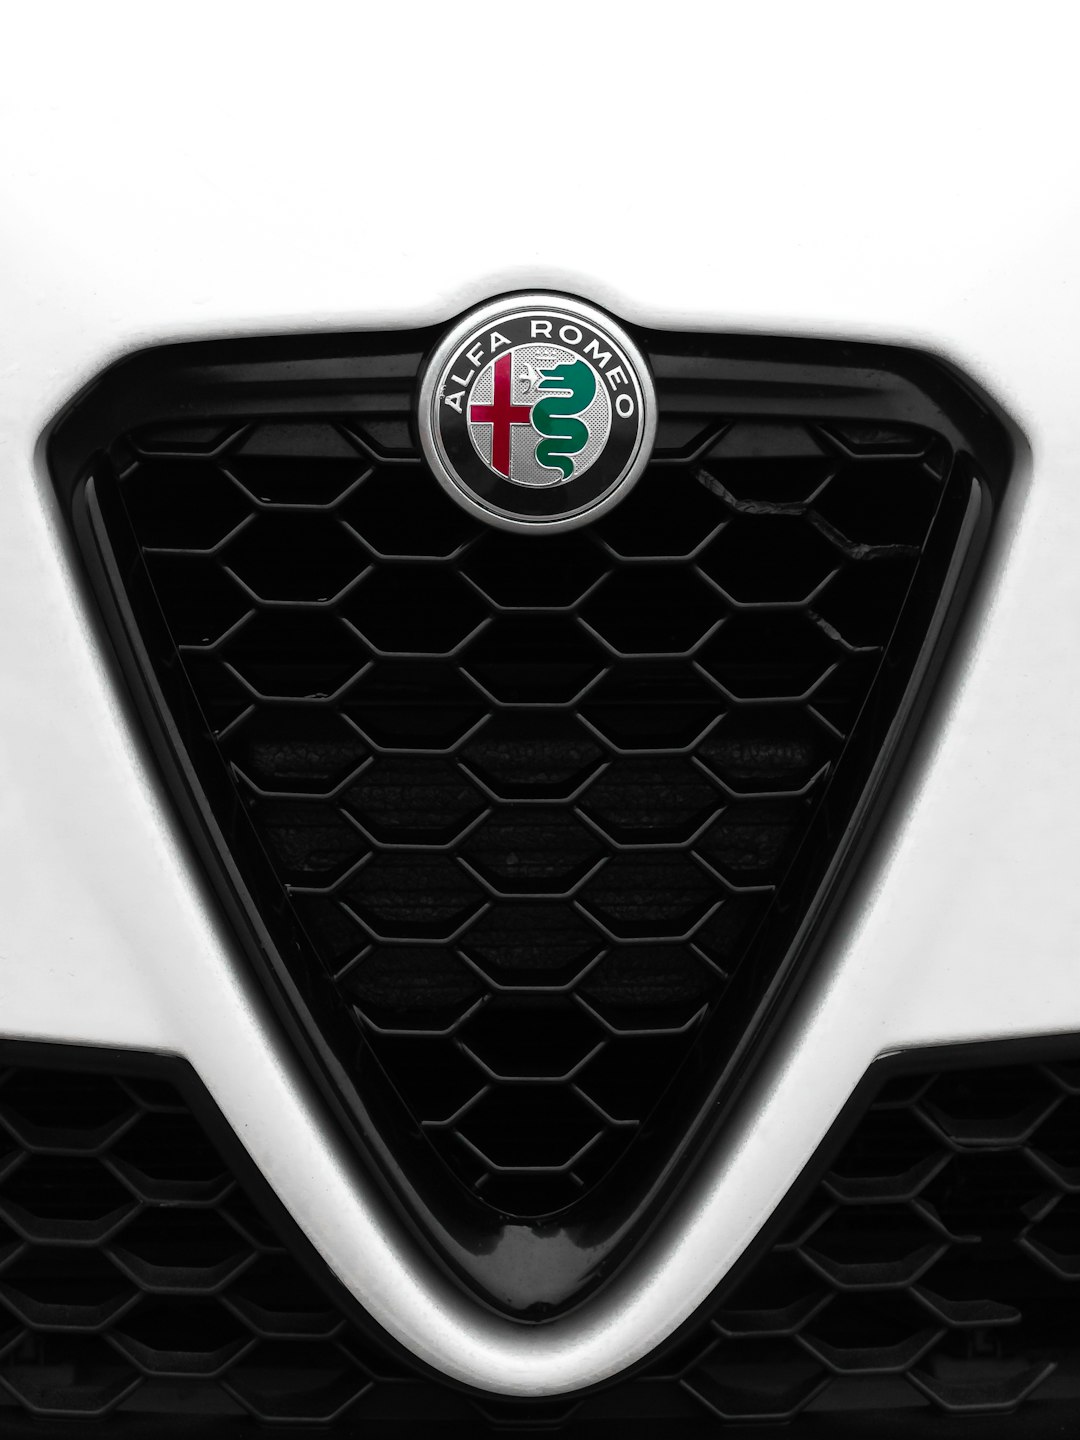 The Alfa Romeo Giulia is a stylish and powerful luxury sports sedan.